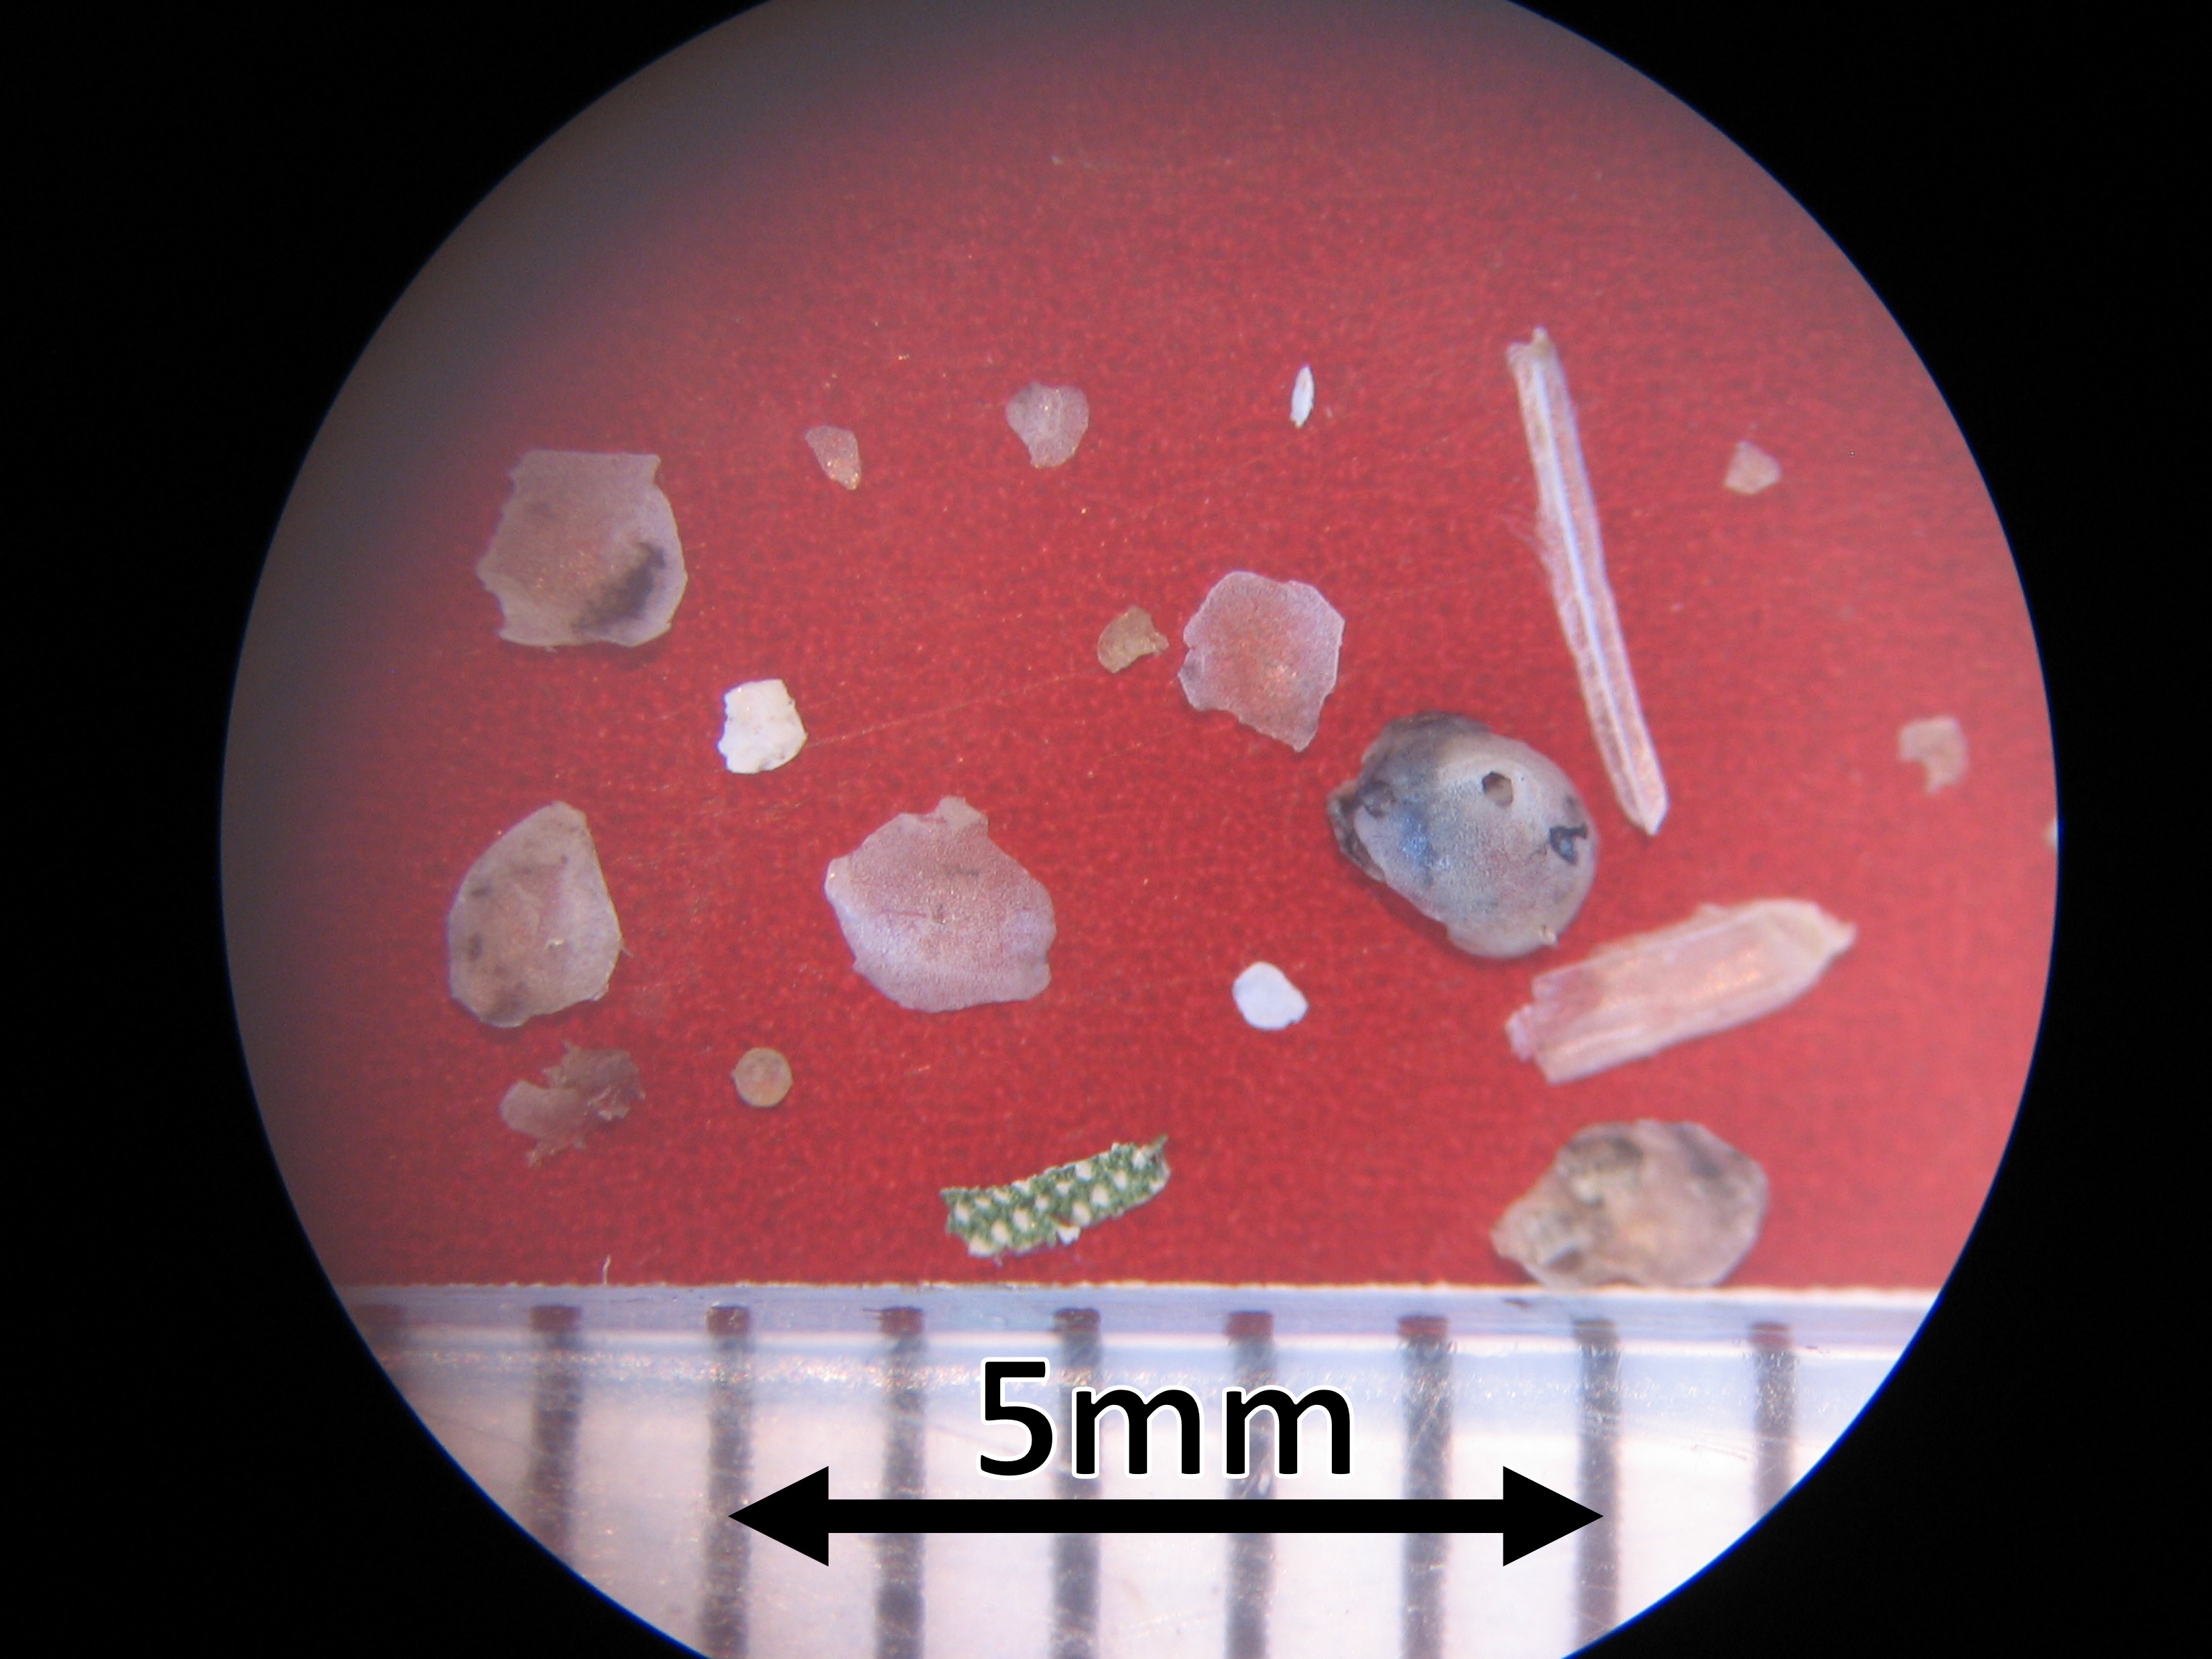 Plastics found in the stomachs of Manx shearwaters on Skomer island